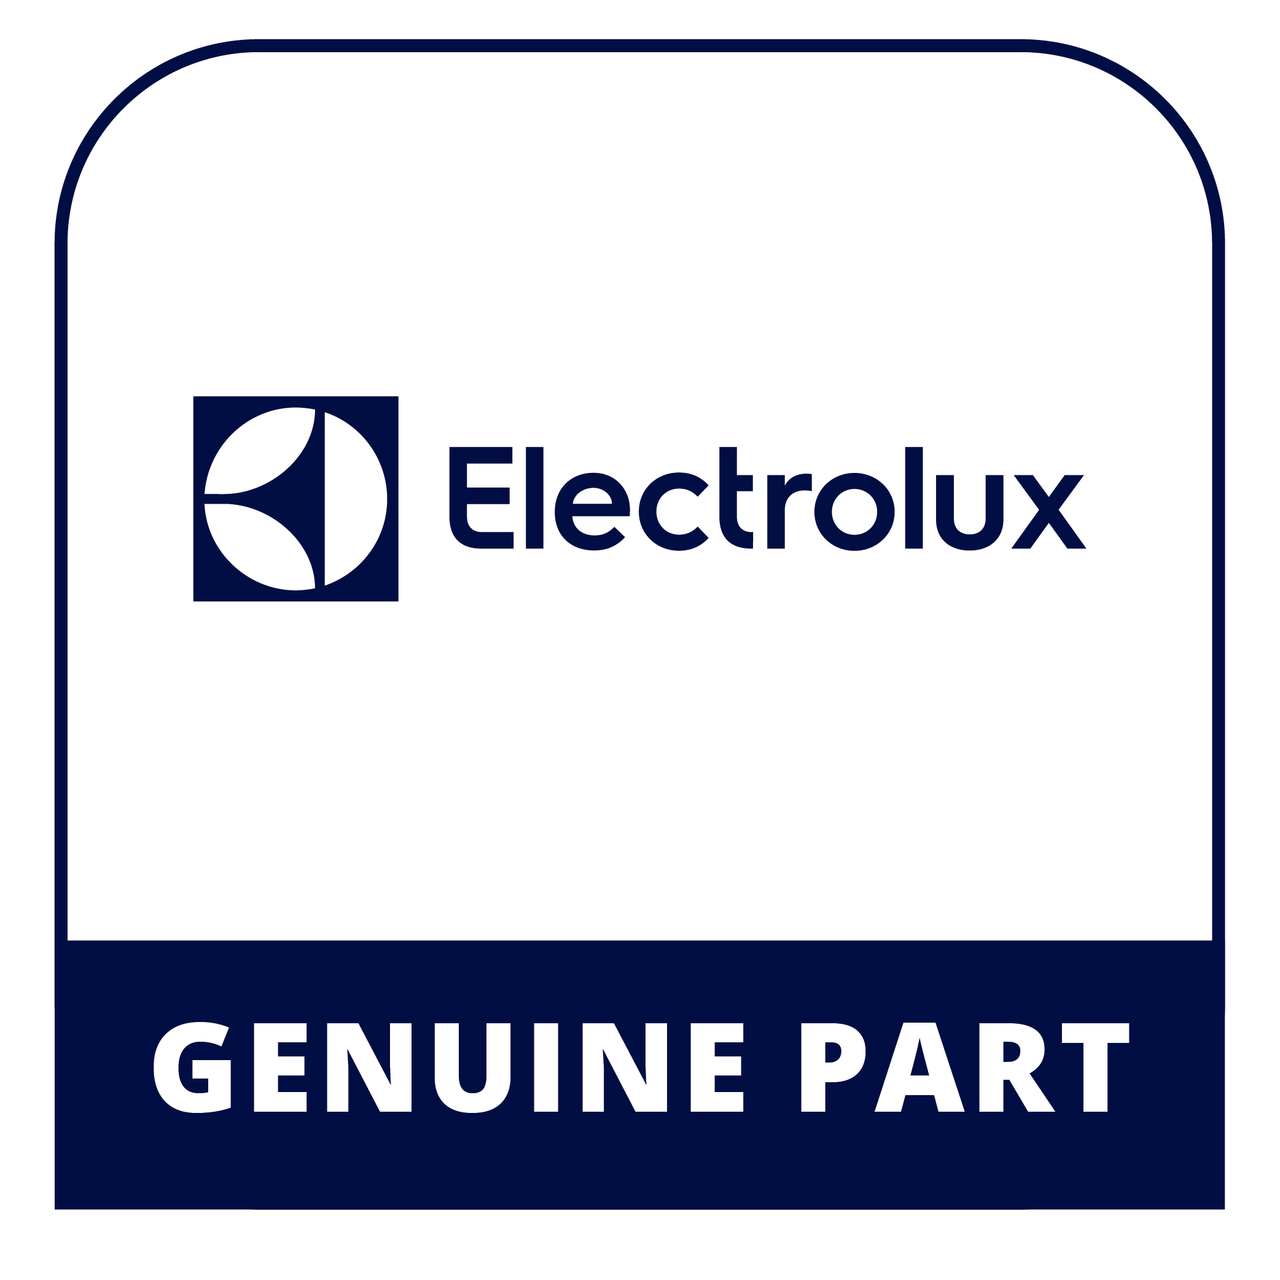 Frigidaire - Electrolux 316517900 Board - Genuine Electrolux Part